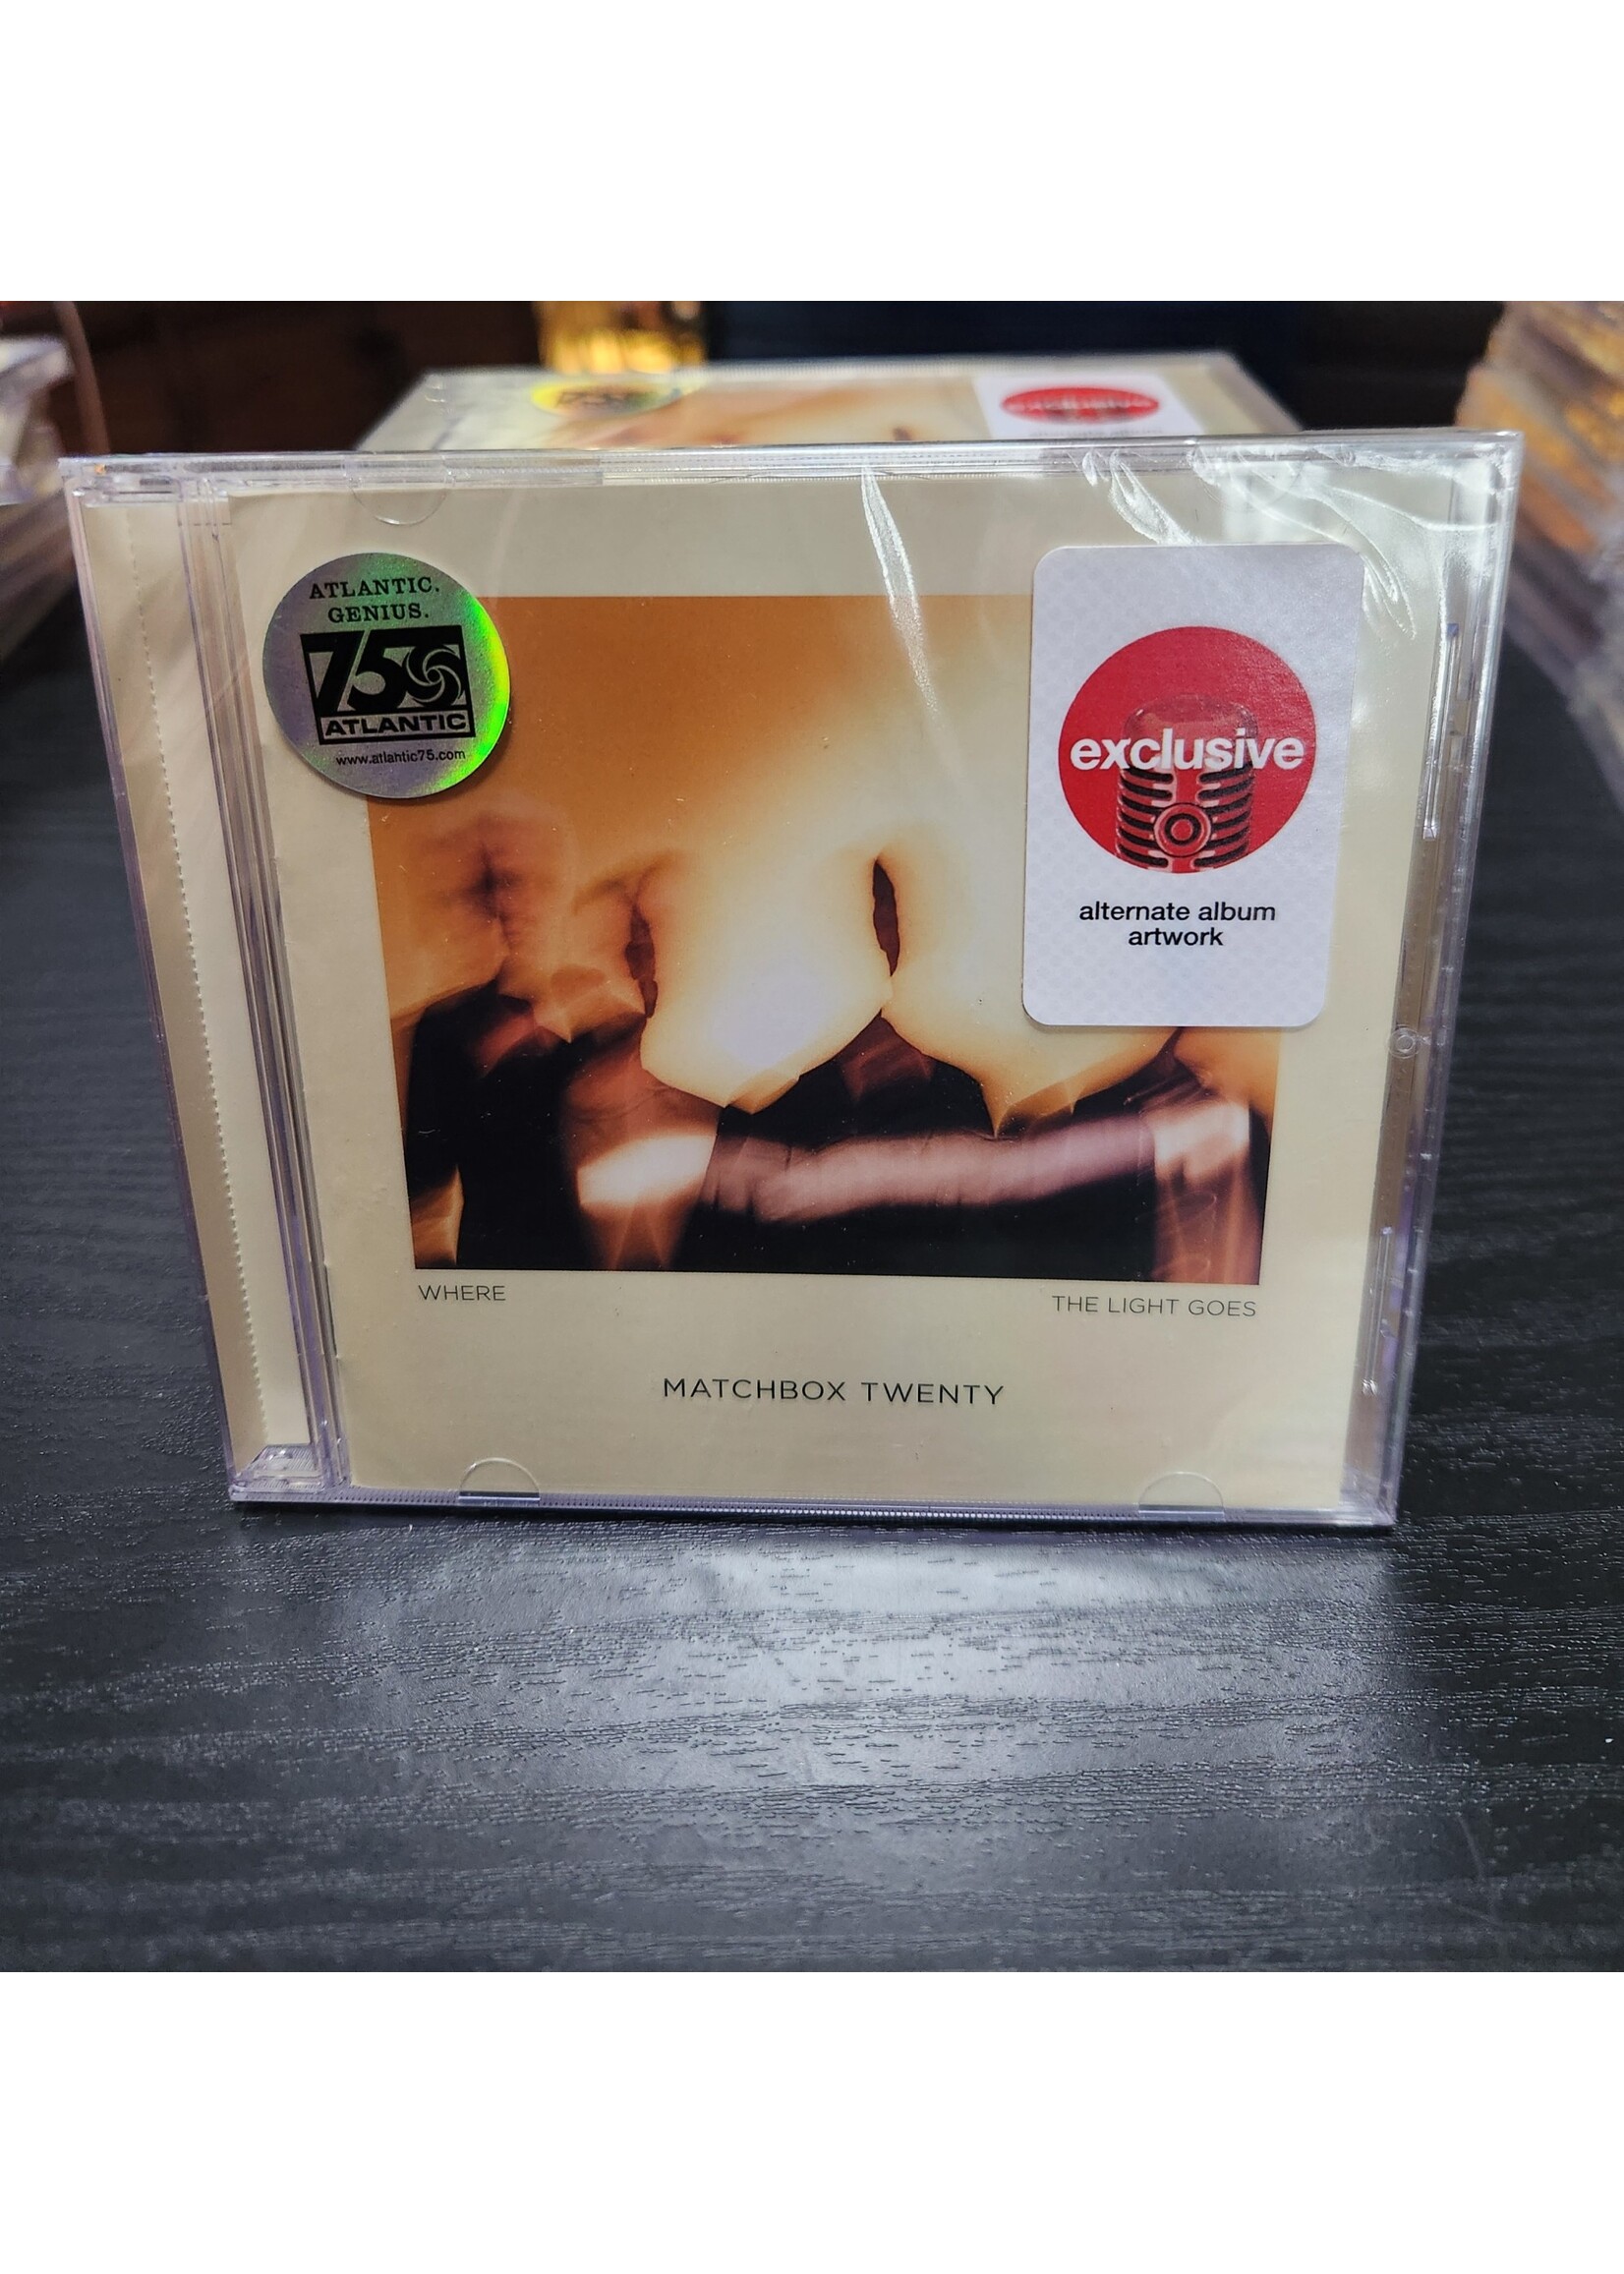 Matchbox Twenty - Where The Light Goes CD (Target Exclusive) (Alternate Artwork)